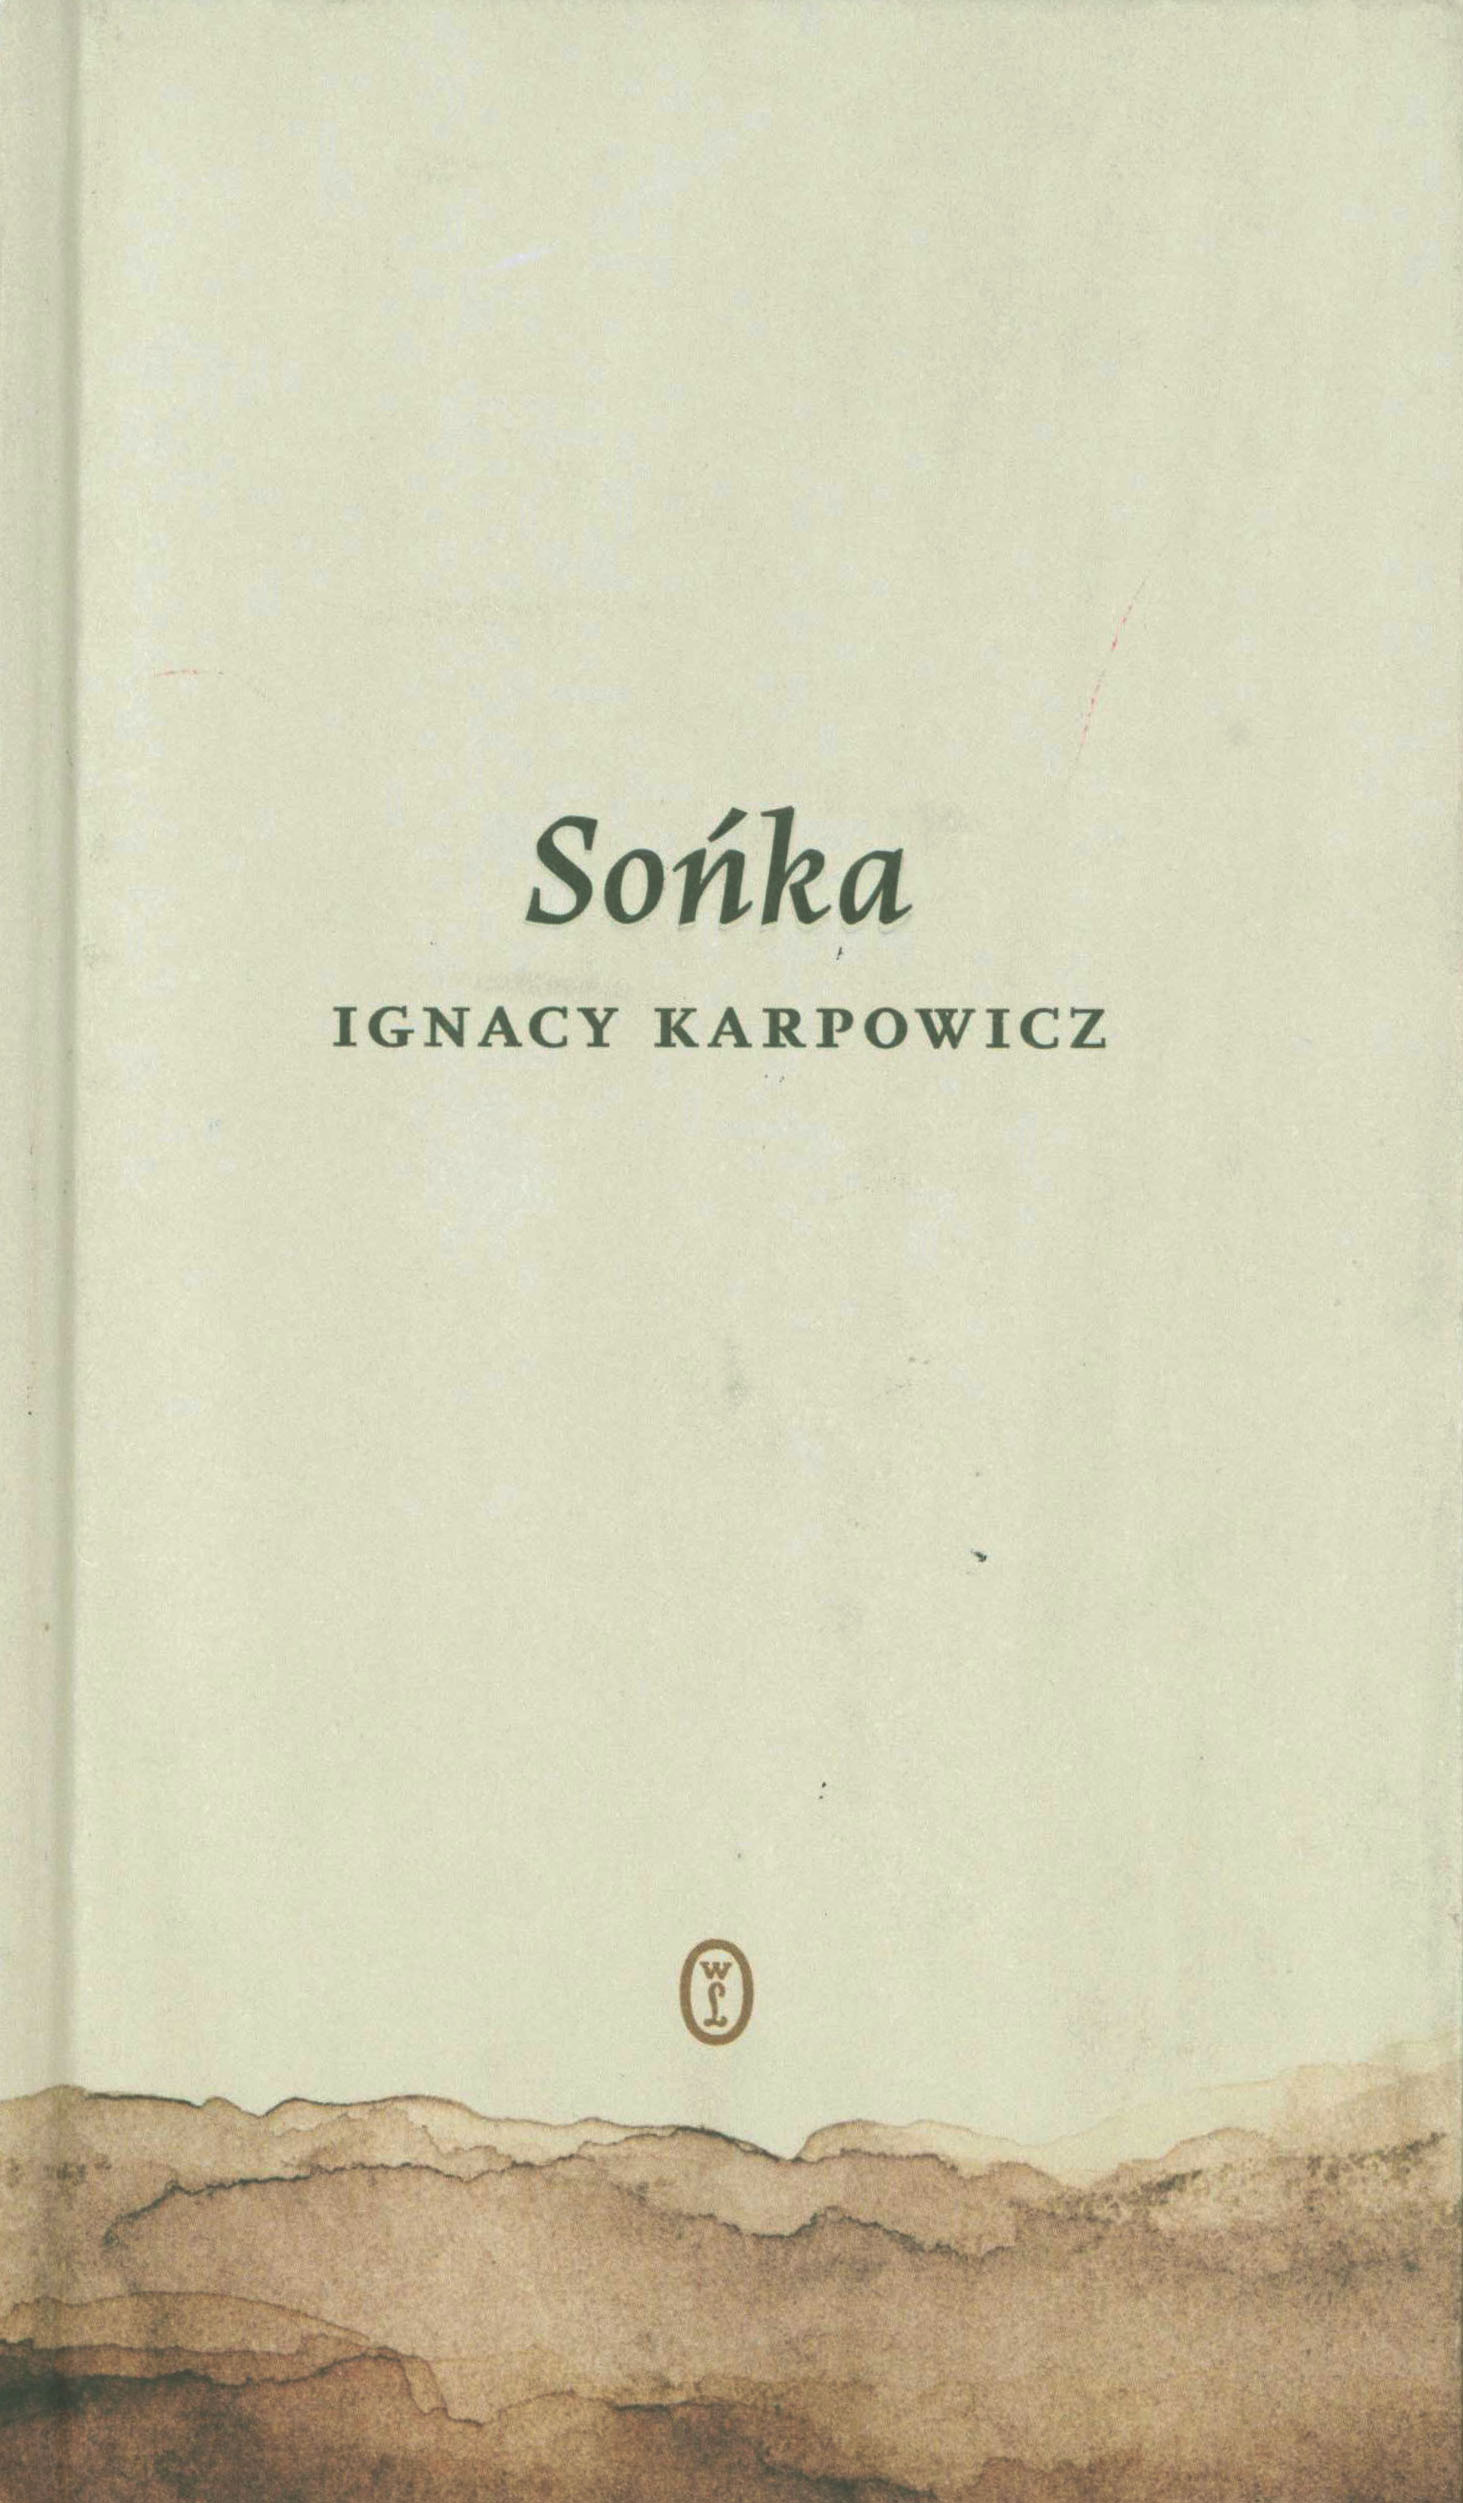 The Sońka - book cover